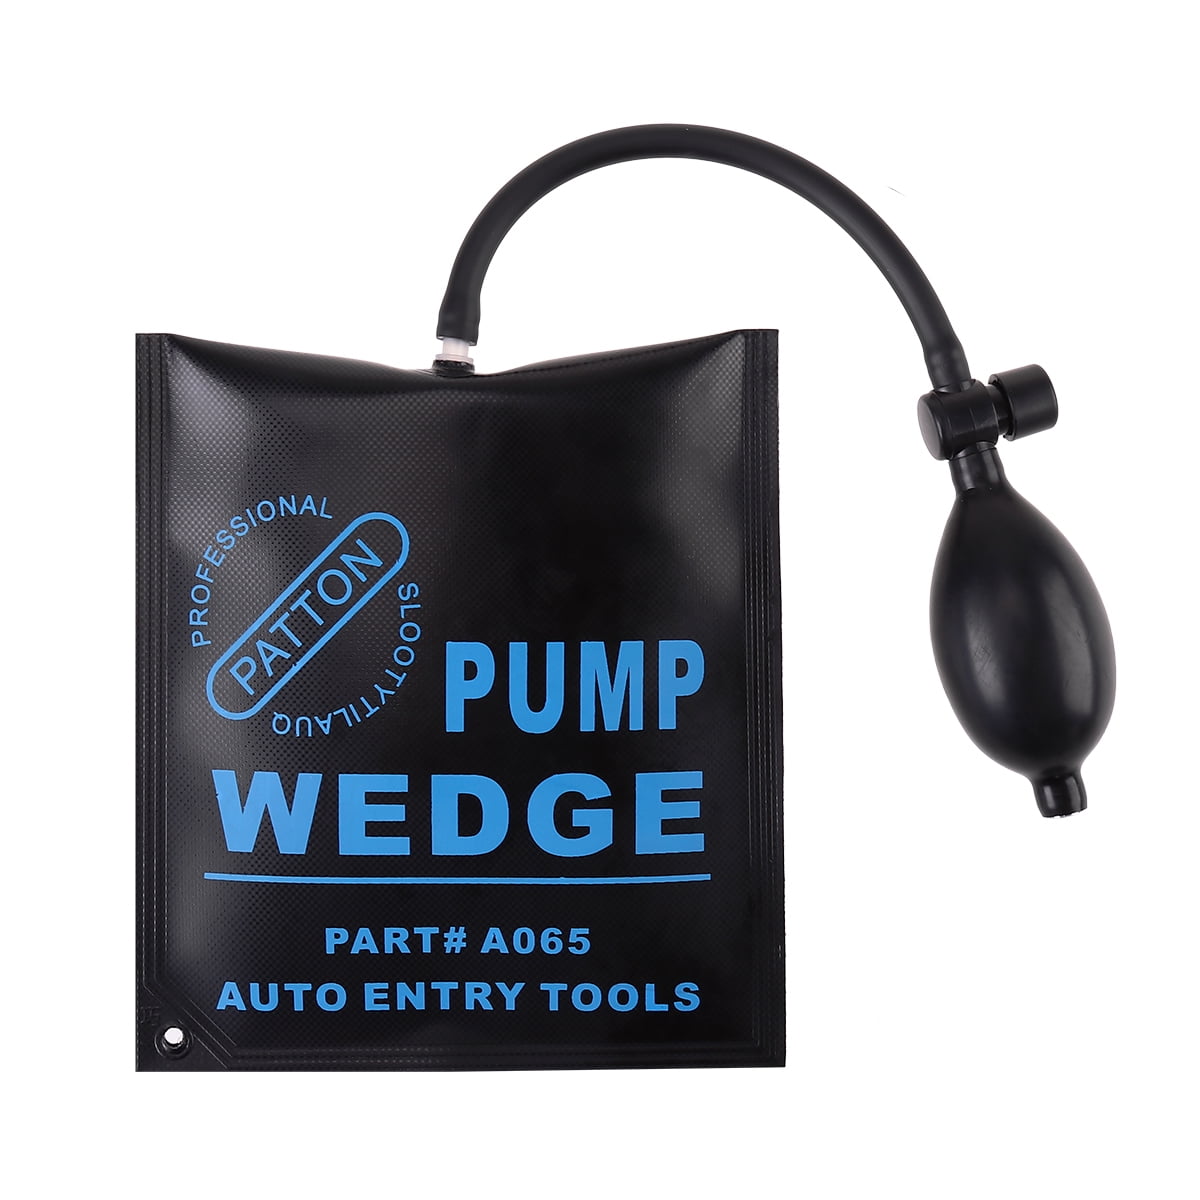 Air Pump Wedge Bag Kit Dent Clamp Shim Tool For Car Door Window Lock Entry Open 